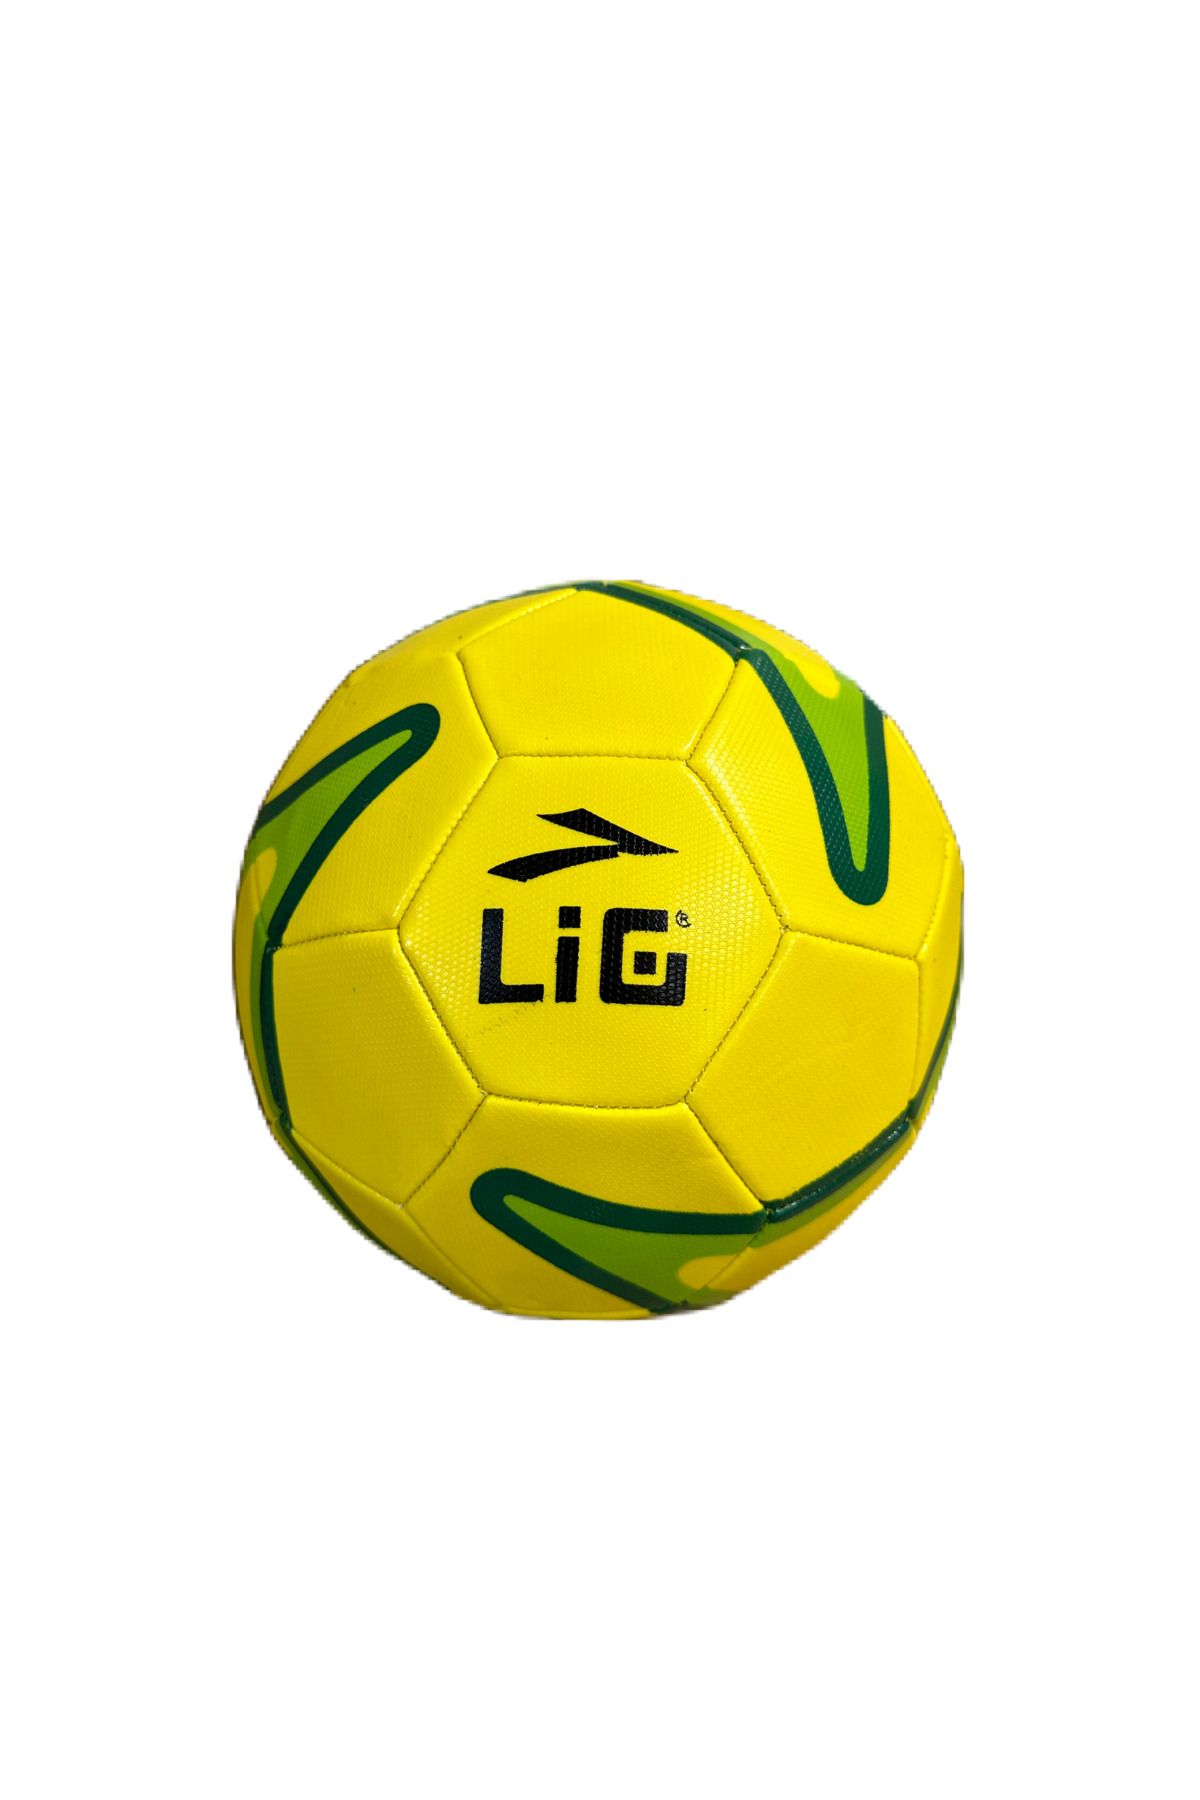 Lig Sarı Futbol Topu